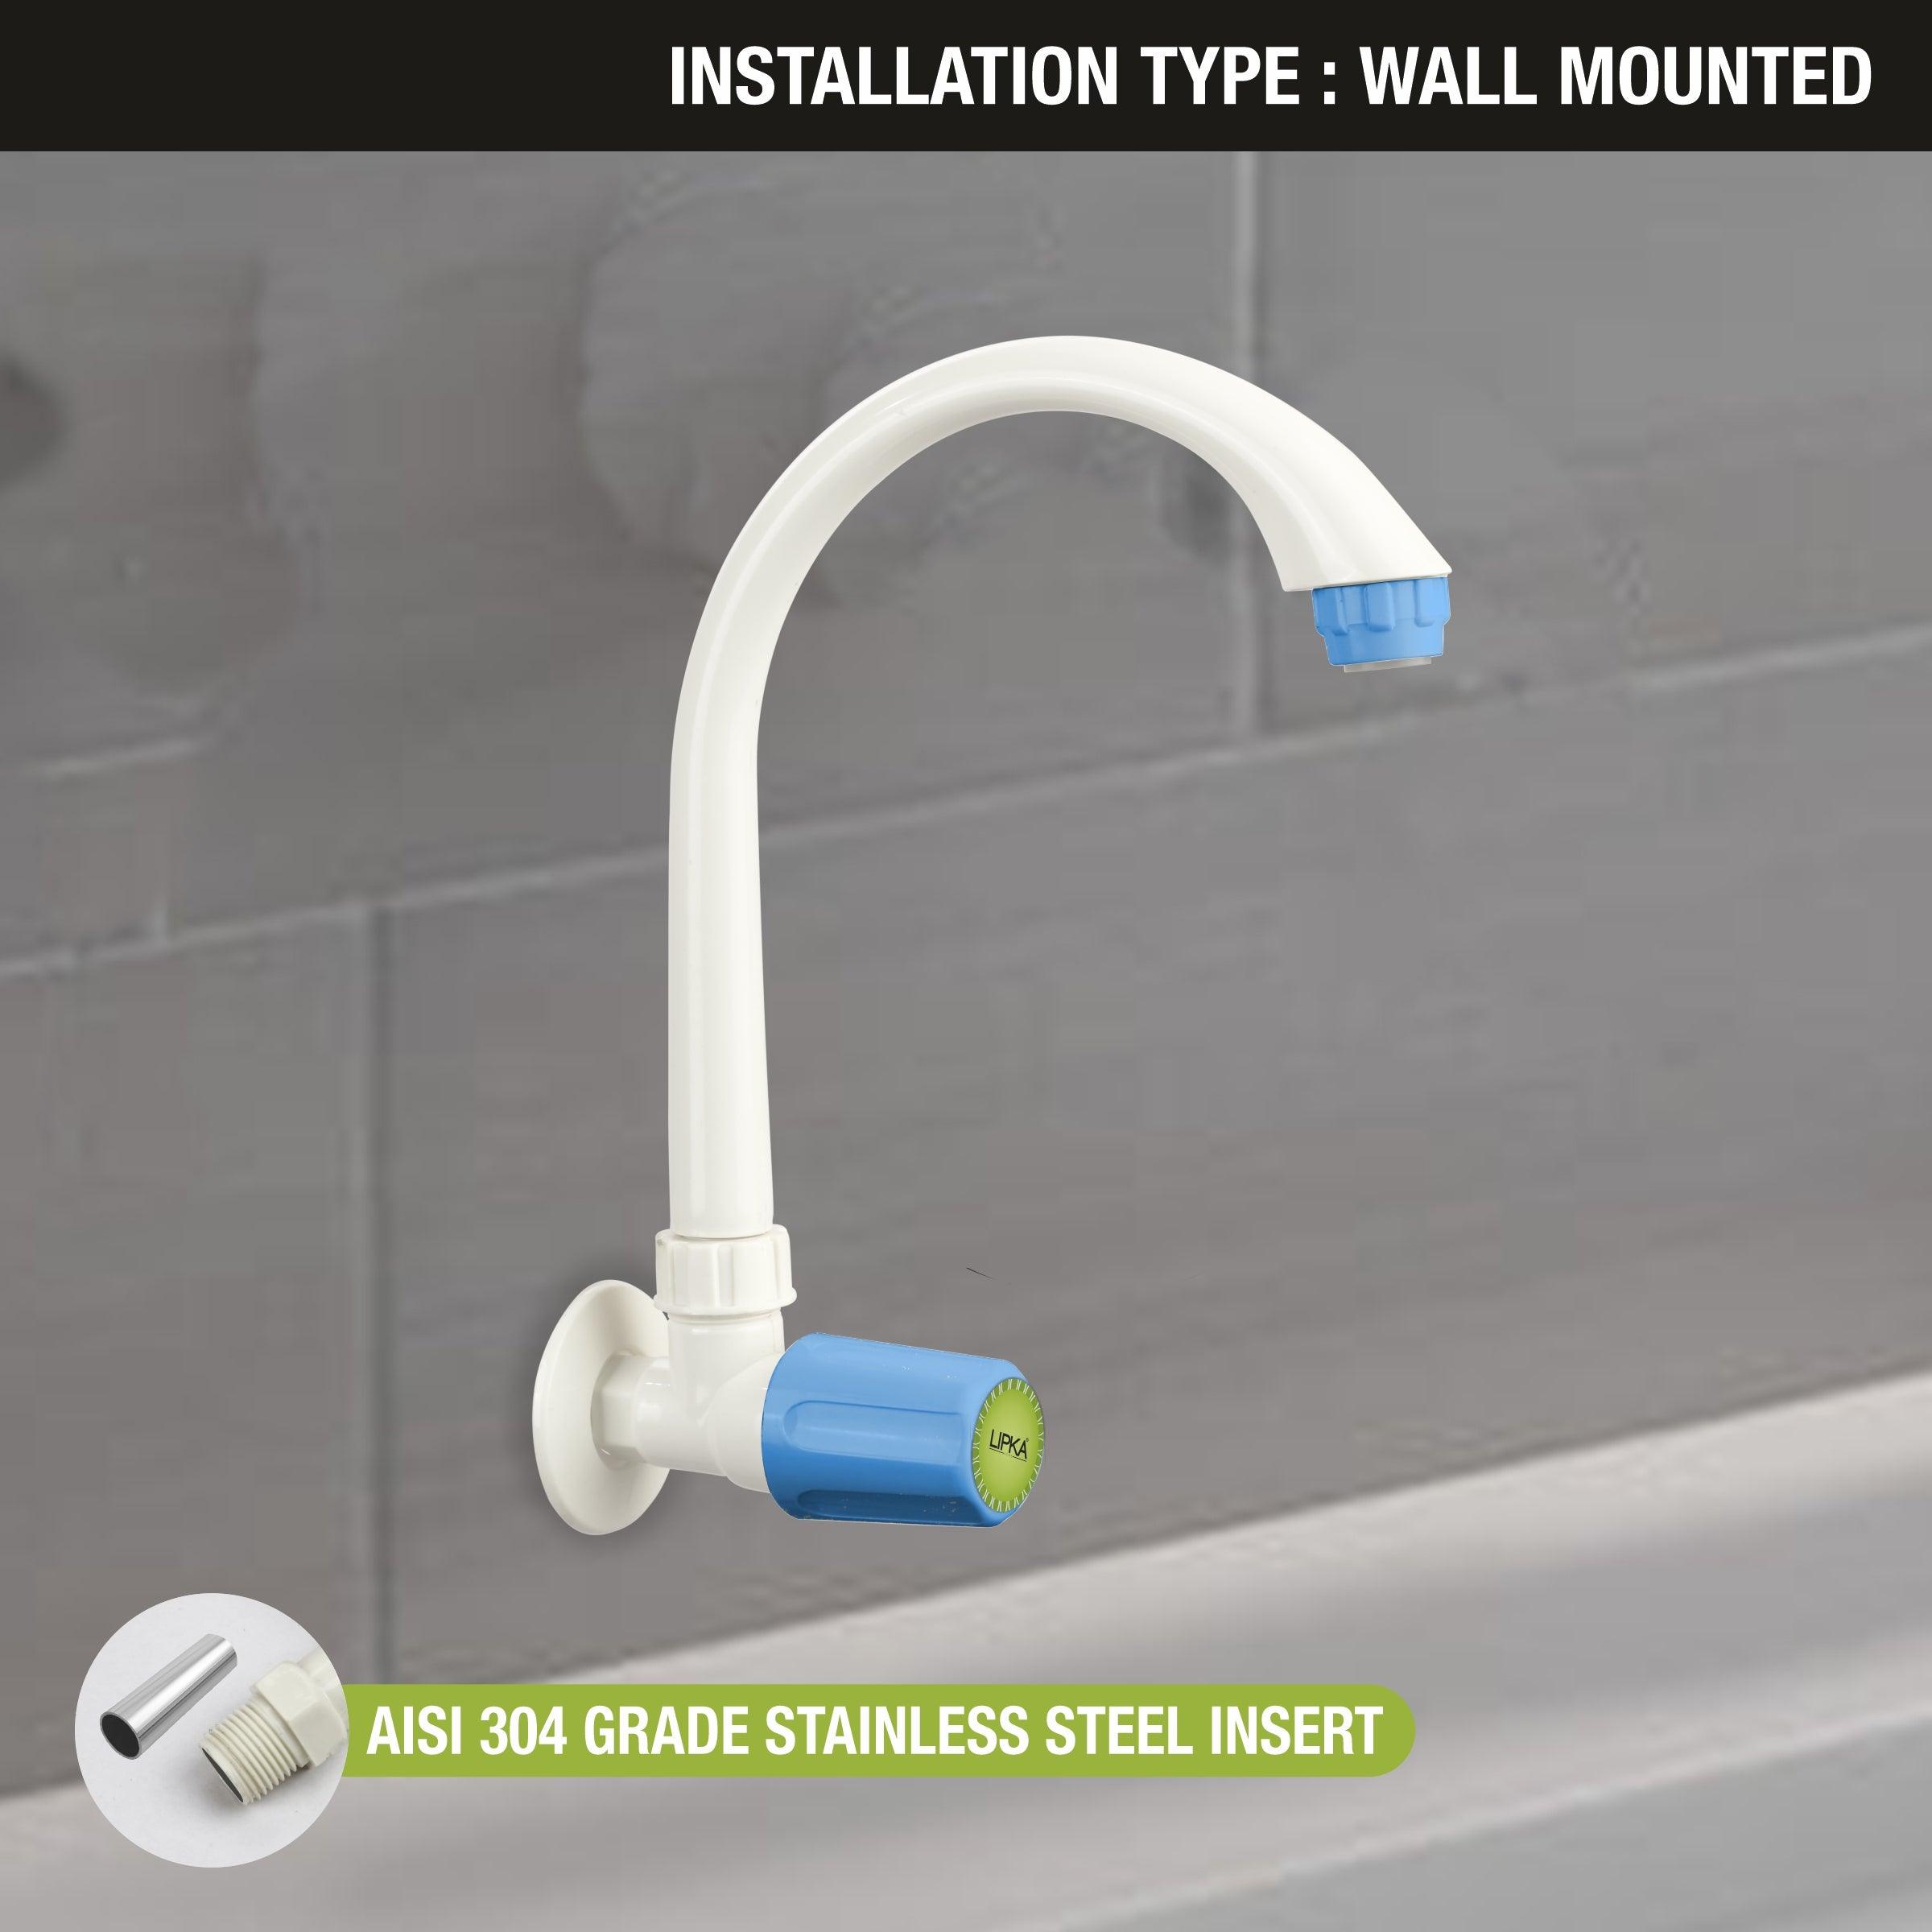 Nobel Sink Tap with Swivel Spout PTMT Faucet lifestyle